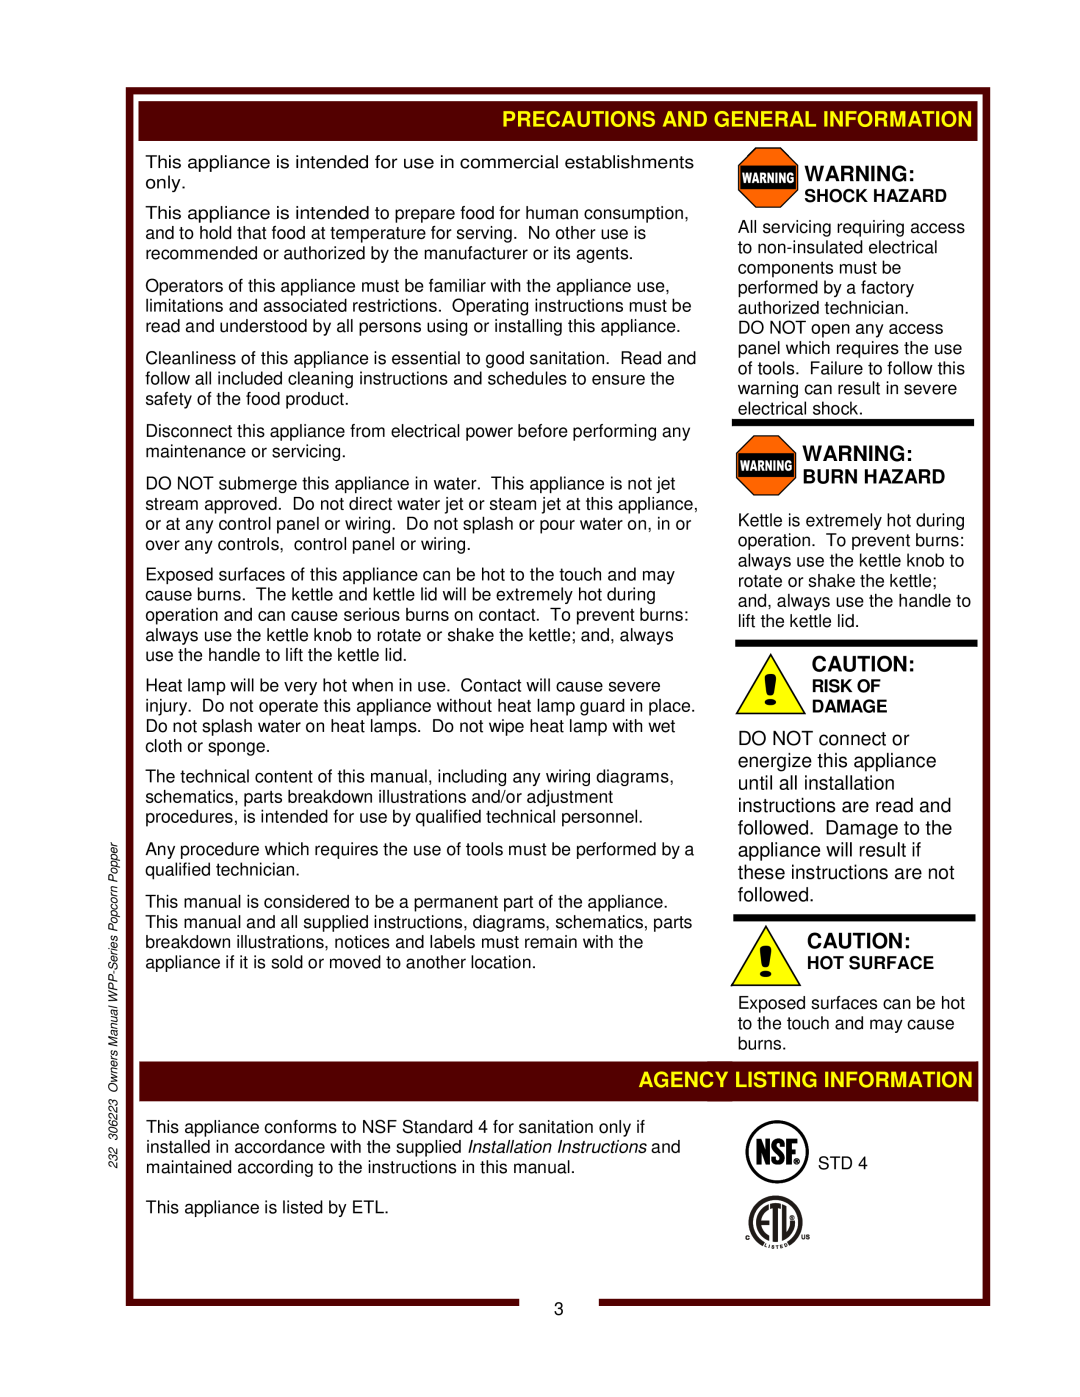 Wells WPP-10 Precautions And General Information, Agency Listing Information, Burn Hazard, Shock Hazard, Risk Of Damage 